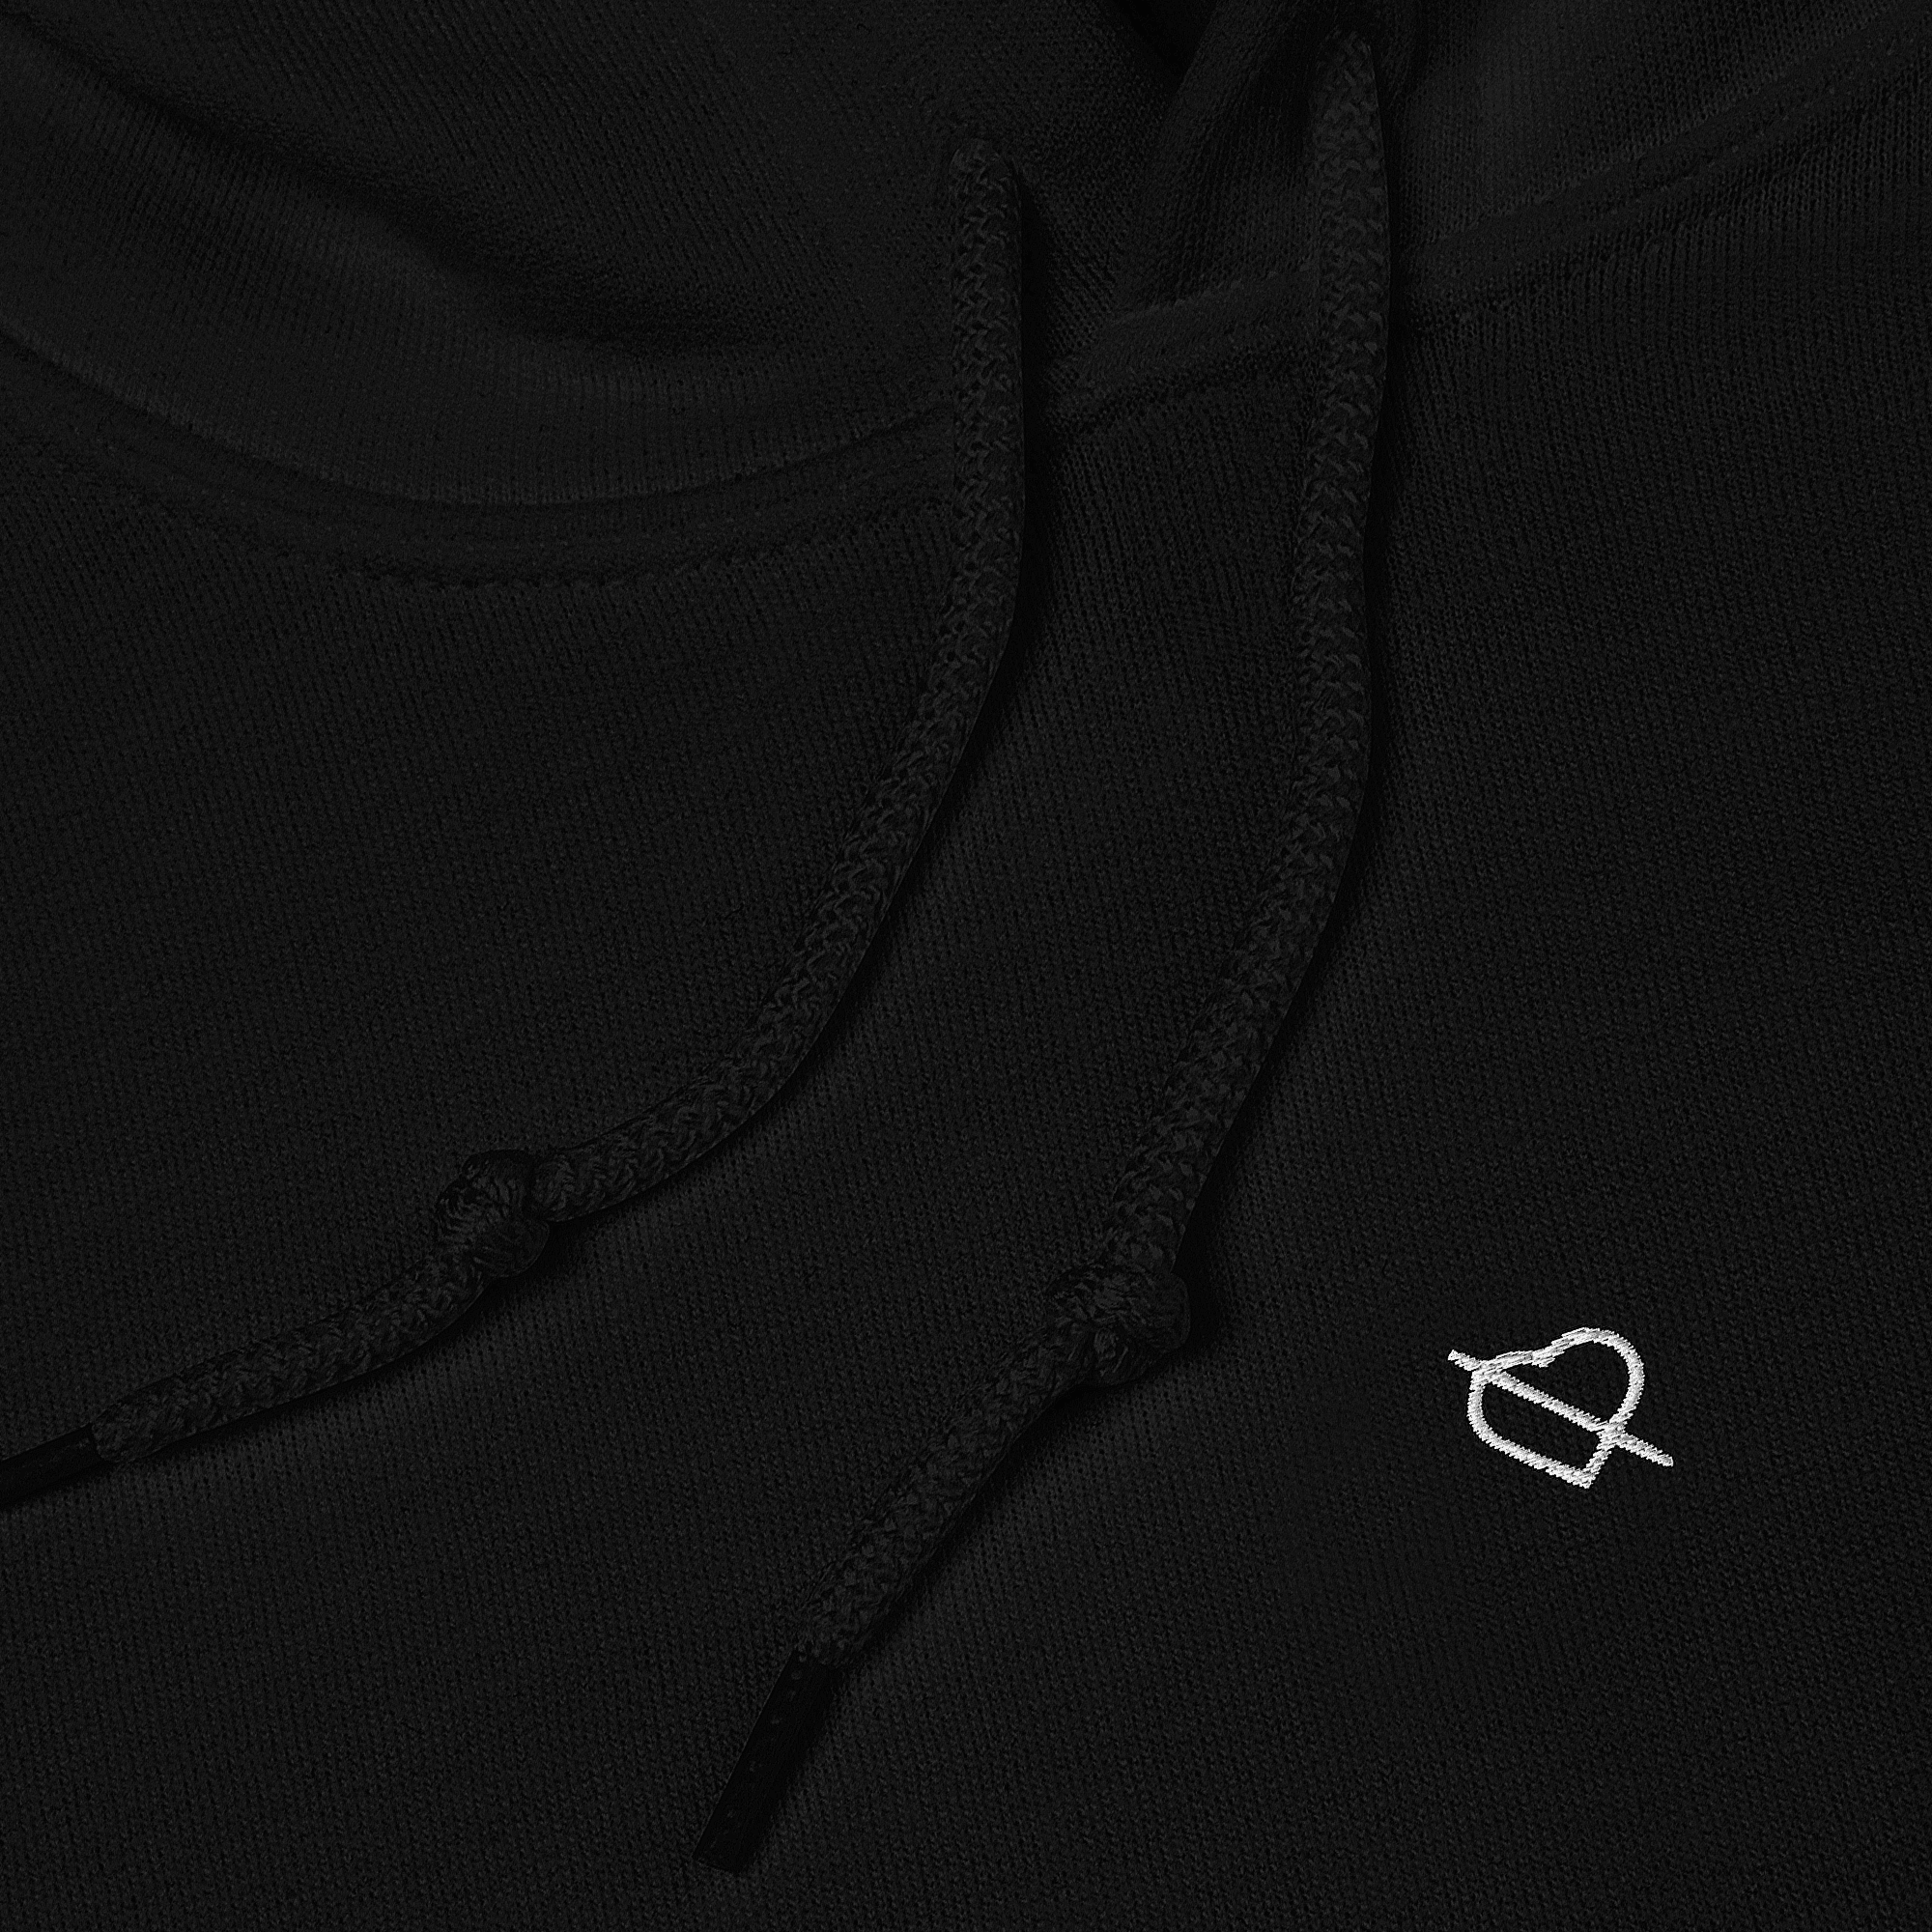 NO LOVE® Embroidered Hoodie (super limited) - Kikillo Club